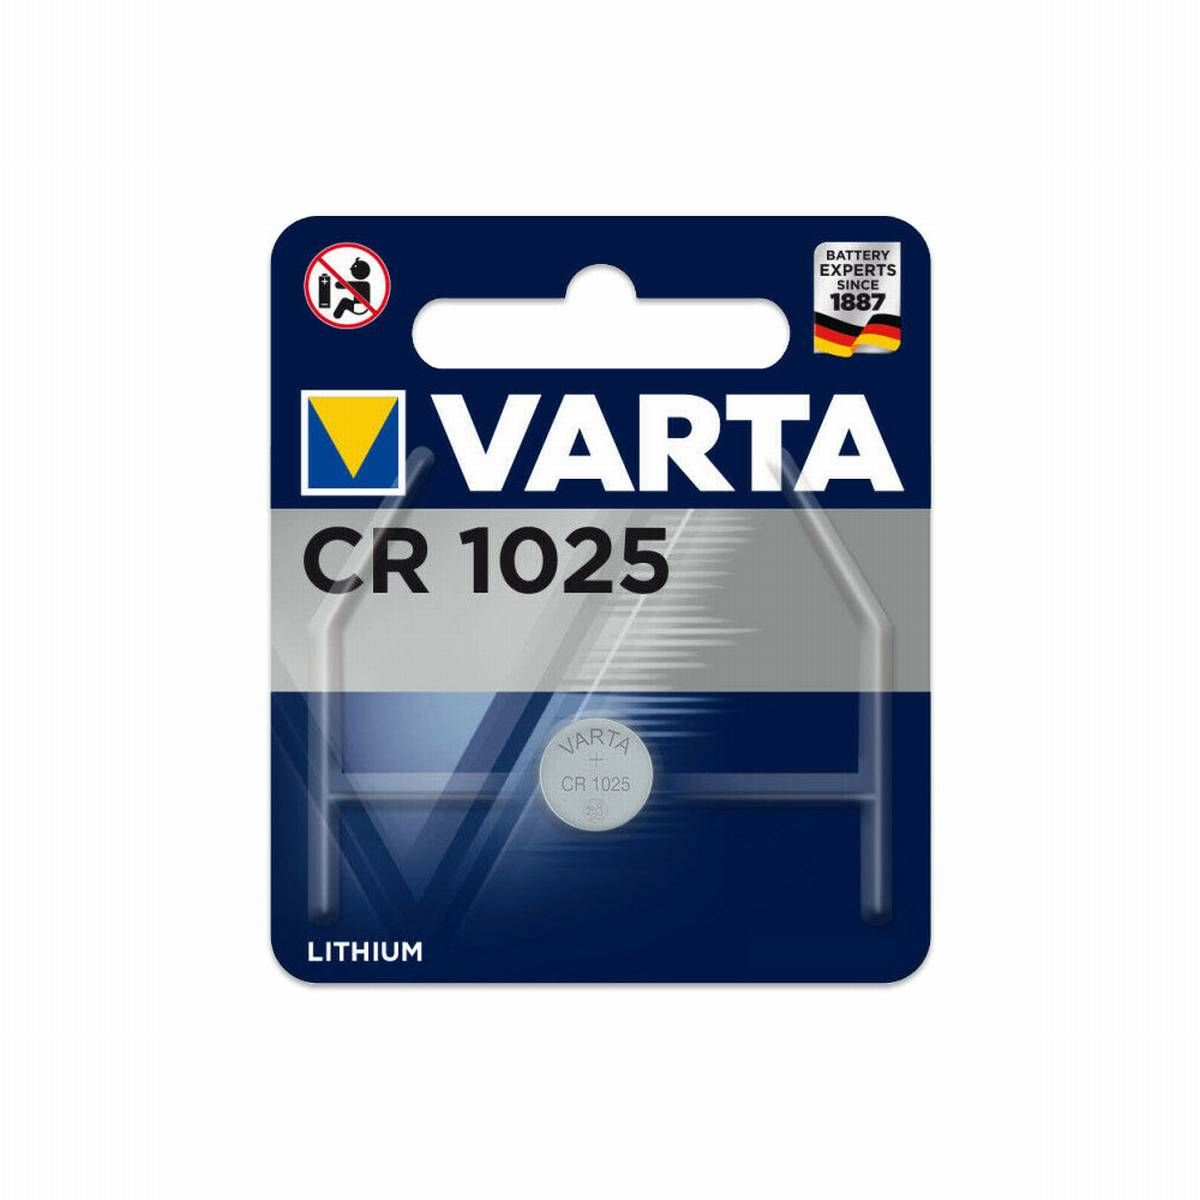 VARTA Electronics (1er 3V Ah Knopfzelle Knopfzelle, 3 Li-MnO2, Blister) CR1025 Lithium Li-MnO2 0.025 Volt